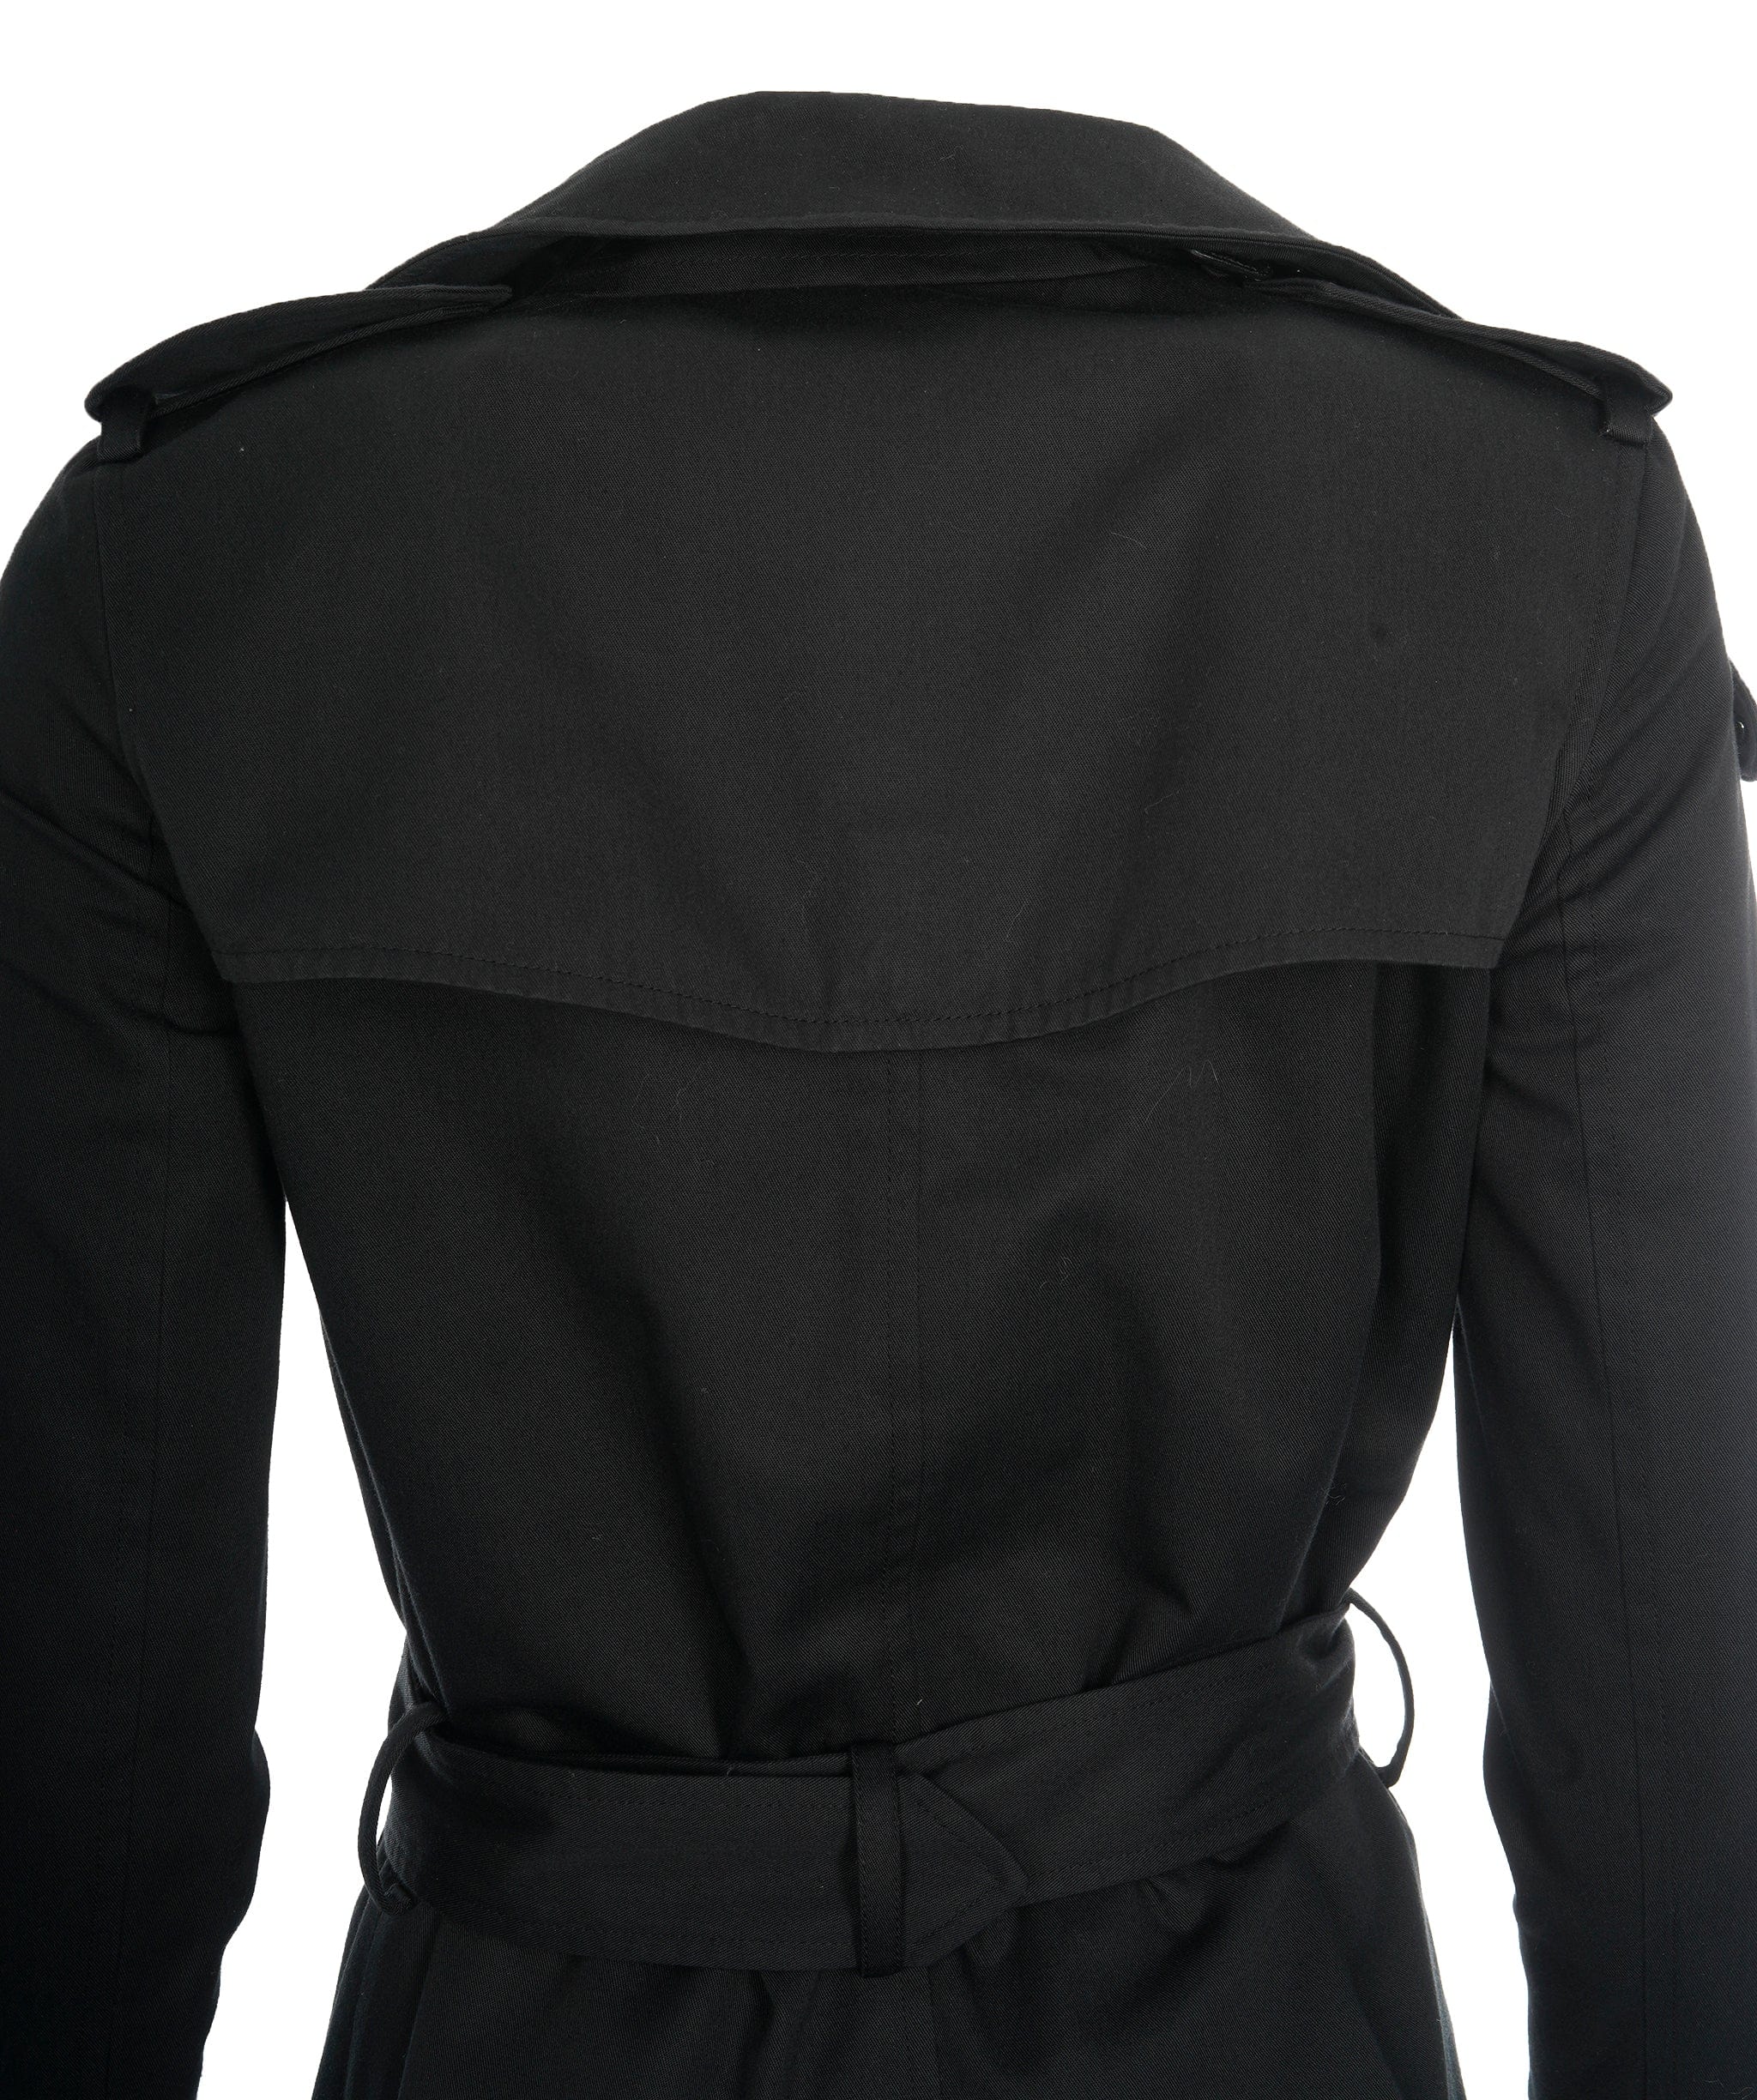 Yves Saint Laurent Saint Laurent Black Double Breasted Trench Coat  ALC1306